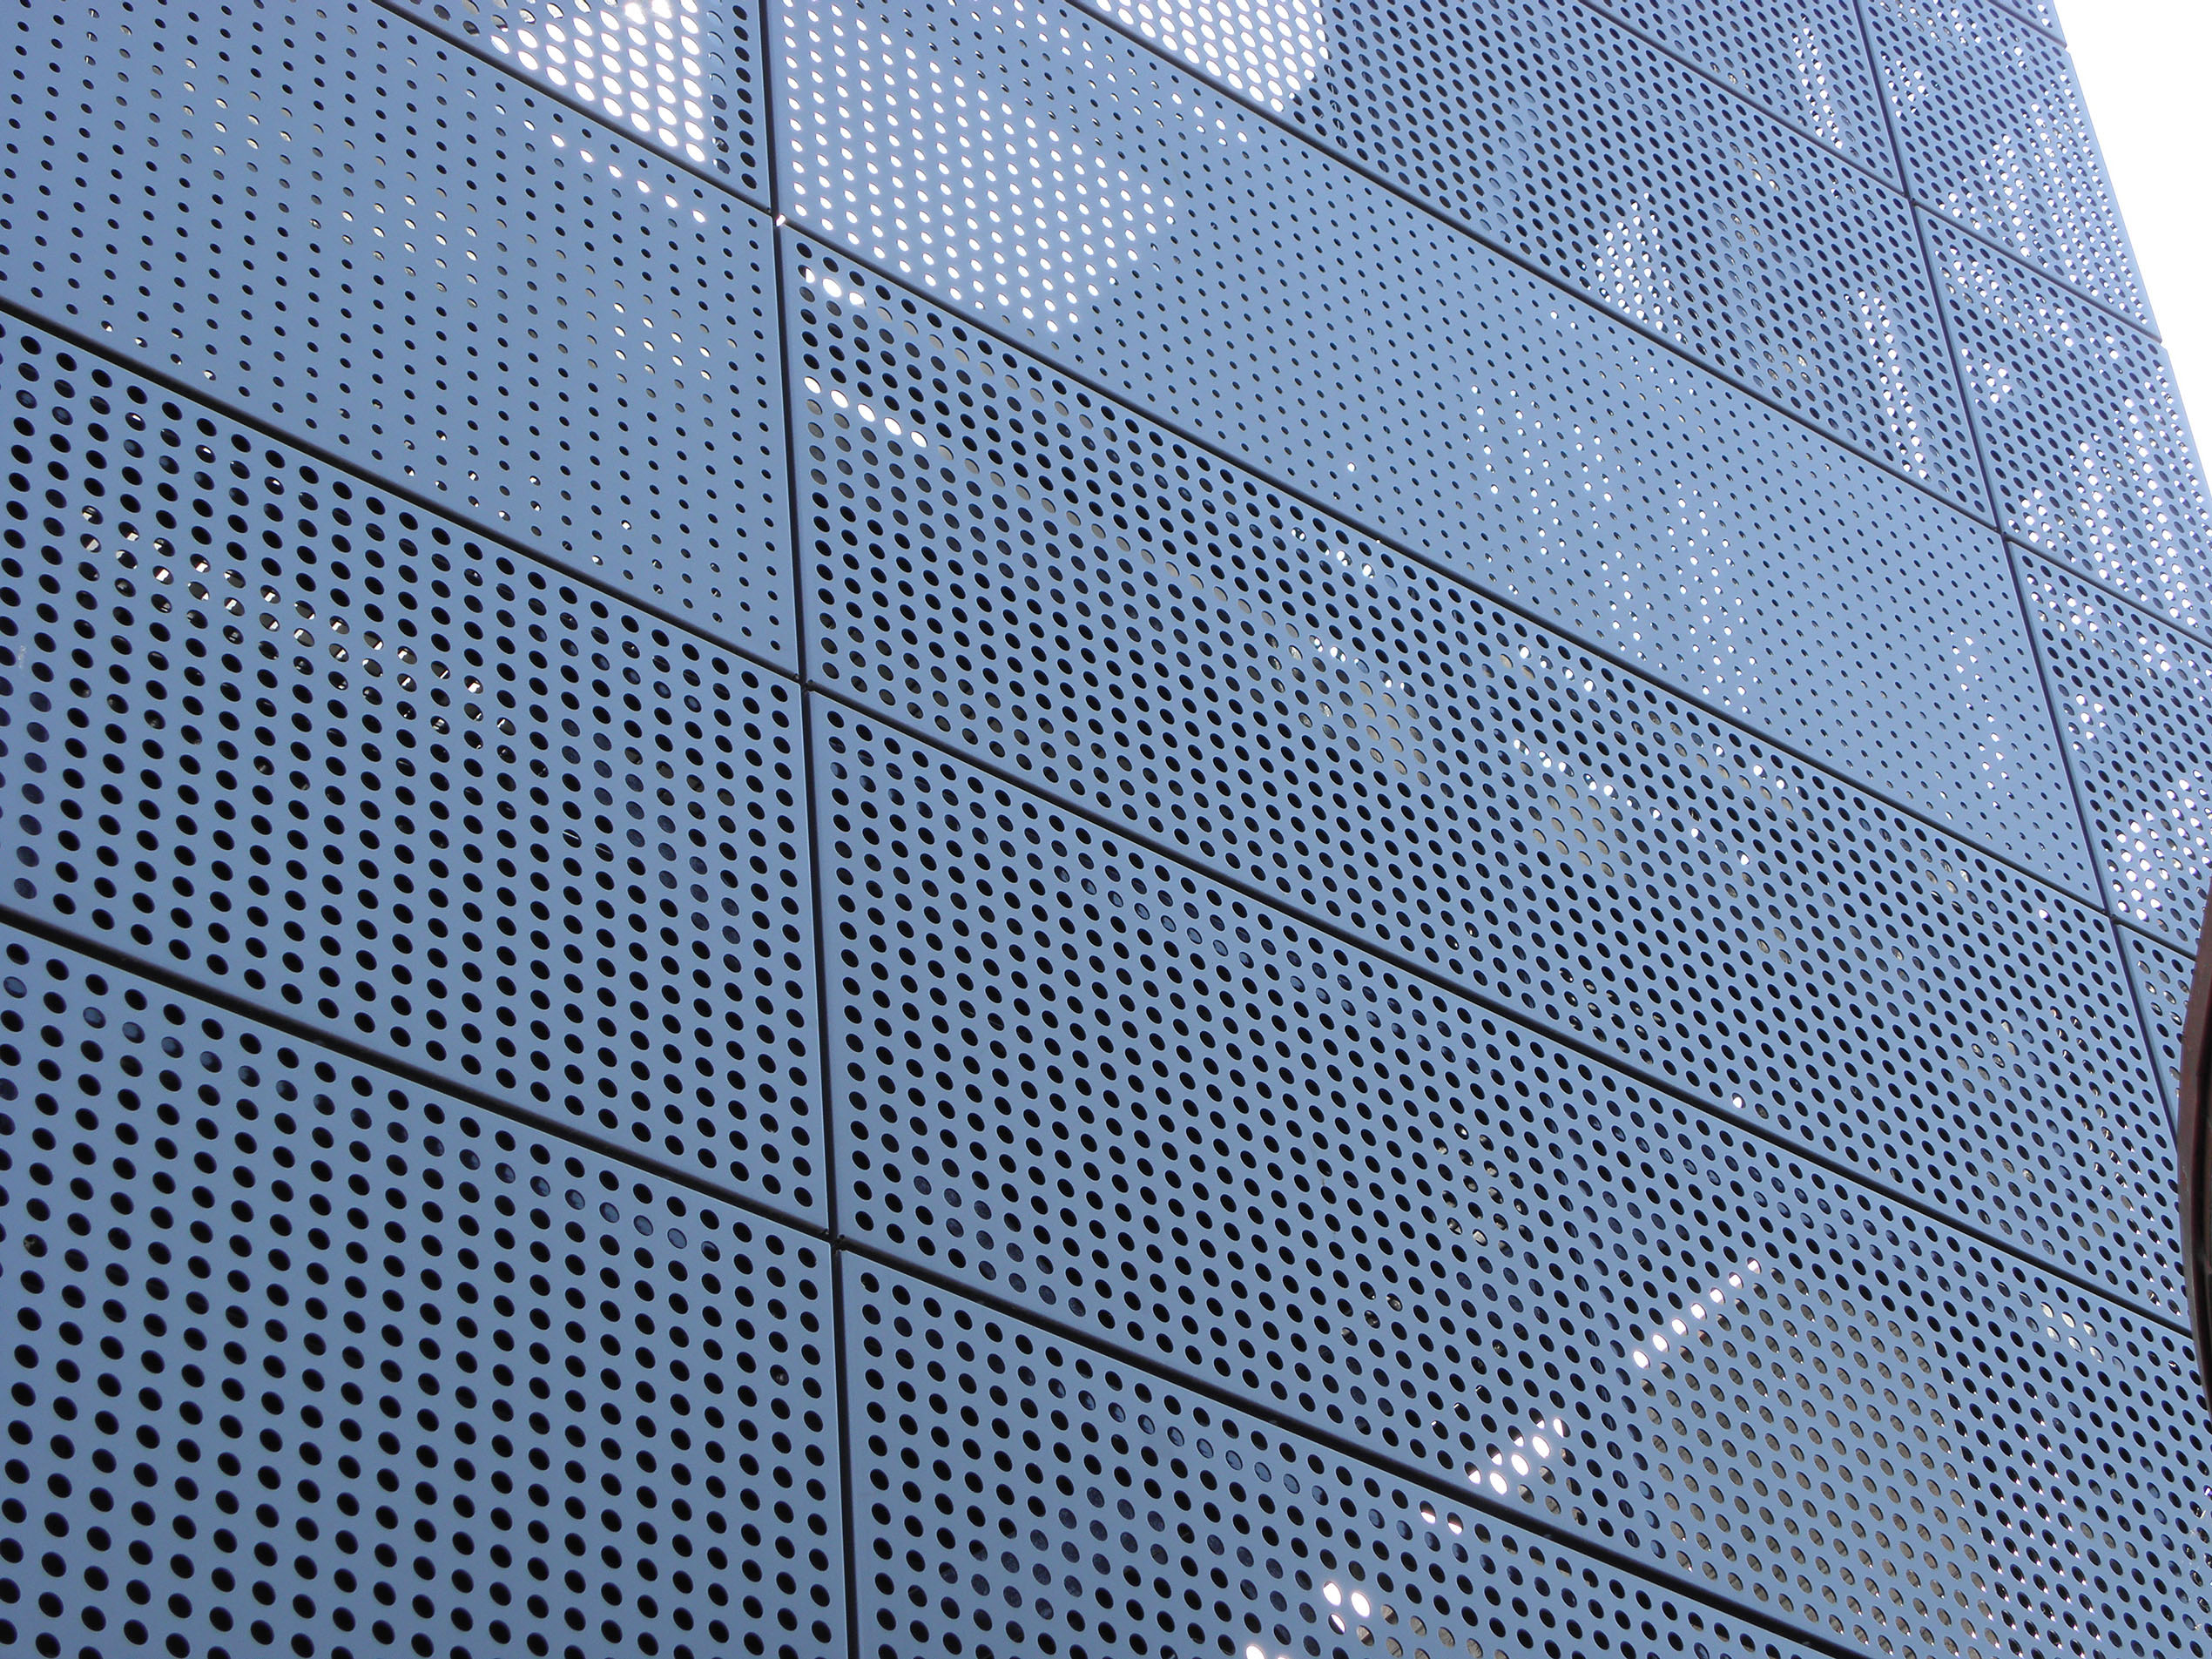 Habillage de façade en aluminium usiné par Delhez